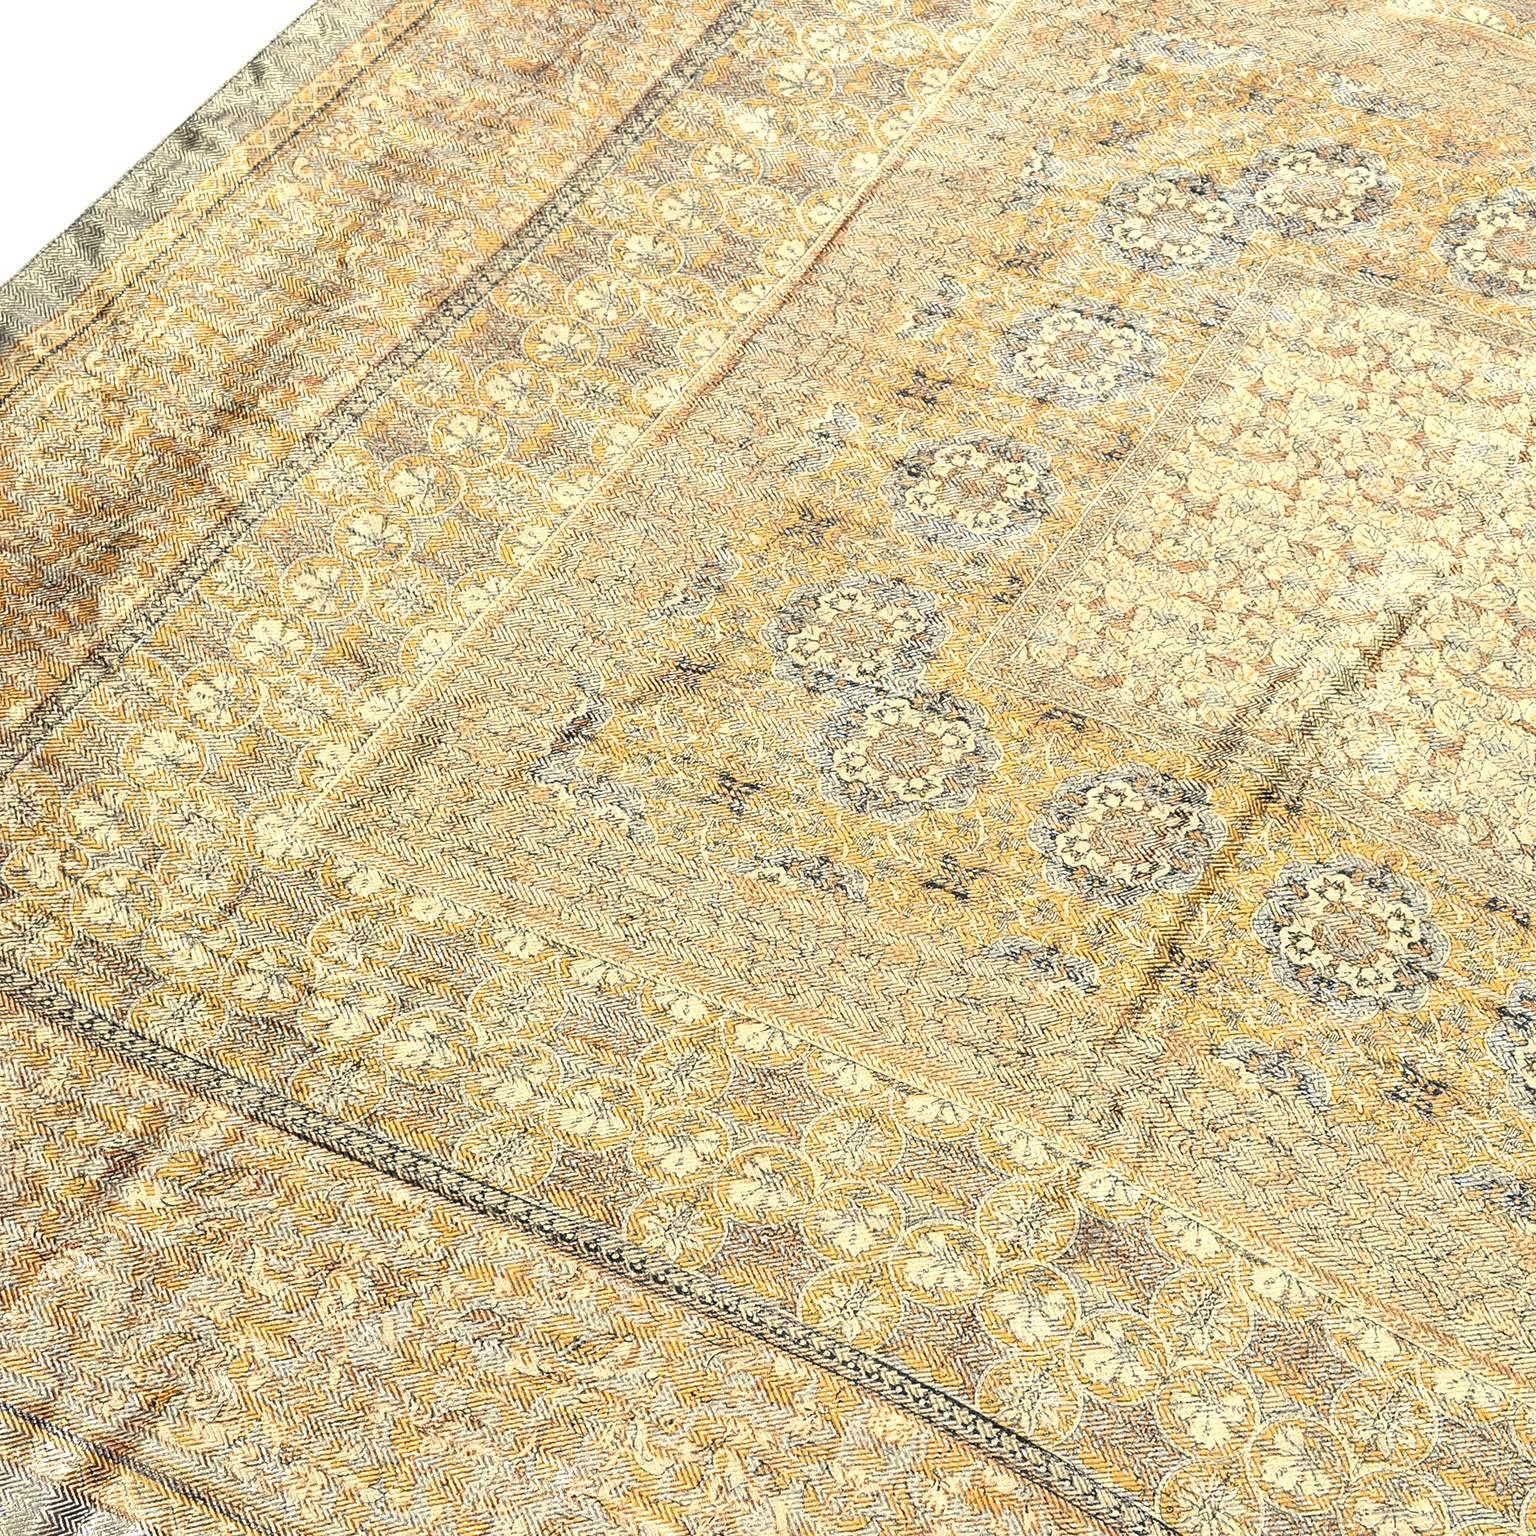 Women's Silk Metallic Gold Patterned Oversized Vintage Scarf or Wrap